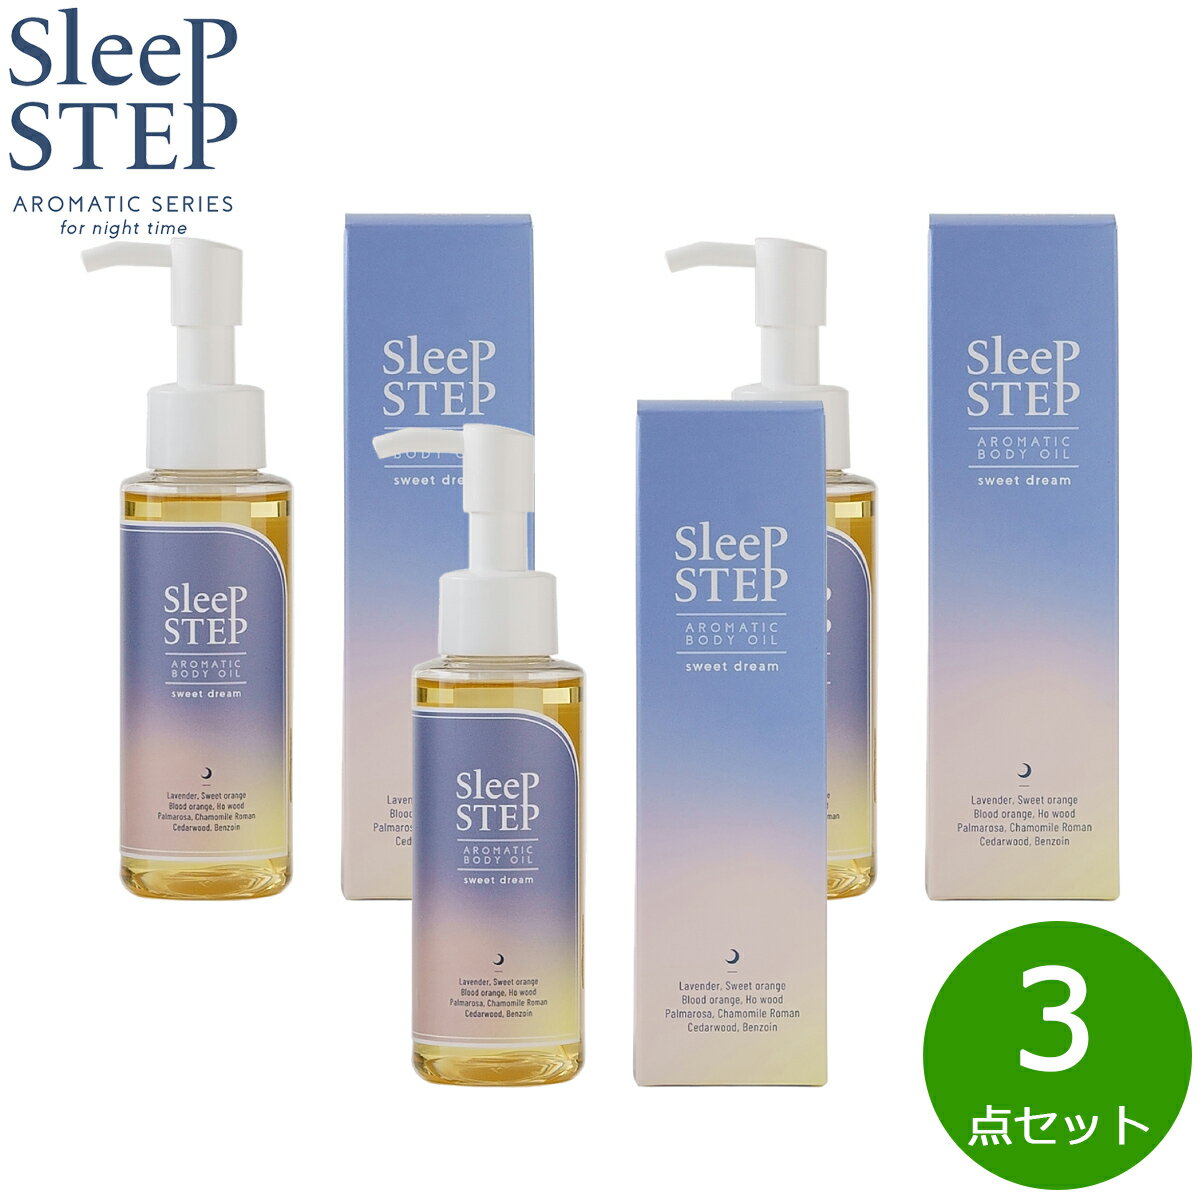 SLEEP STEP スリープステップ アロマティックボディオイル スイートドリーム 100ml×3本 まとめ買い マッサージ フローラルラベンダー 日本製 シリコンフリー 合成香料不使用 